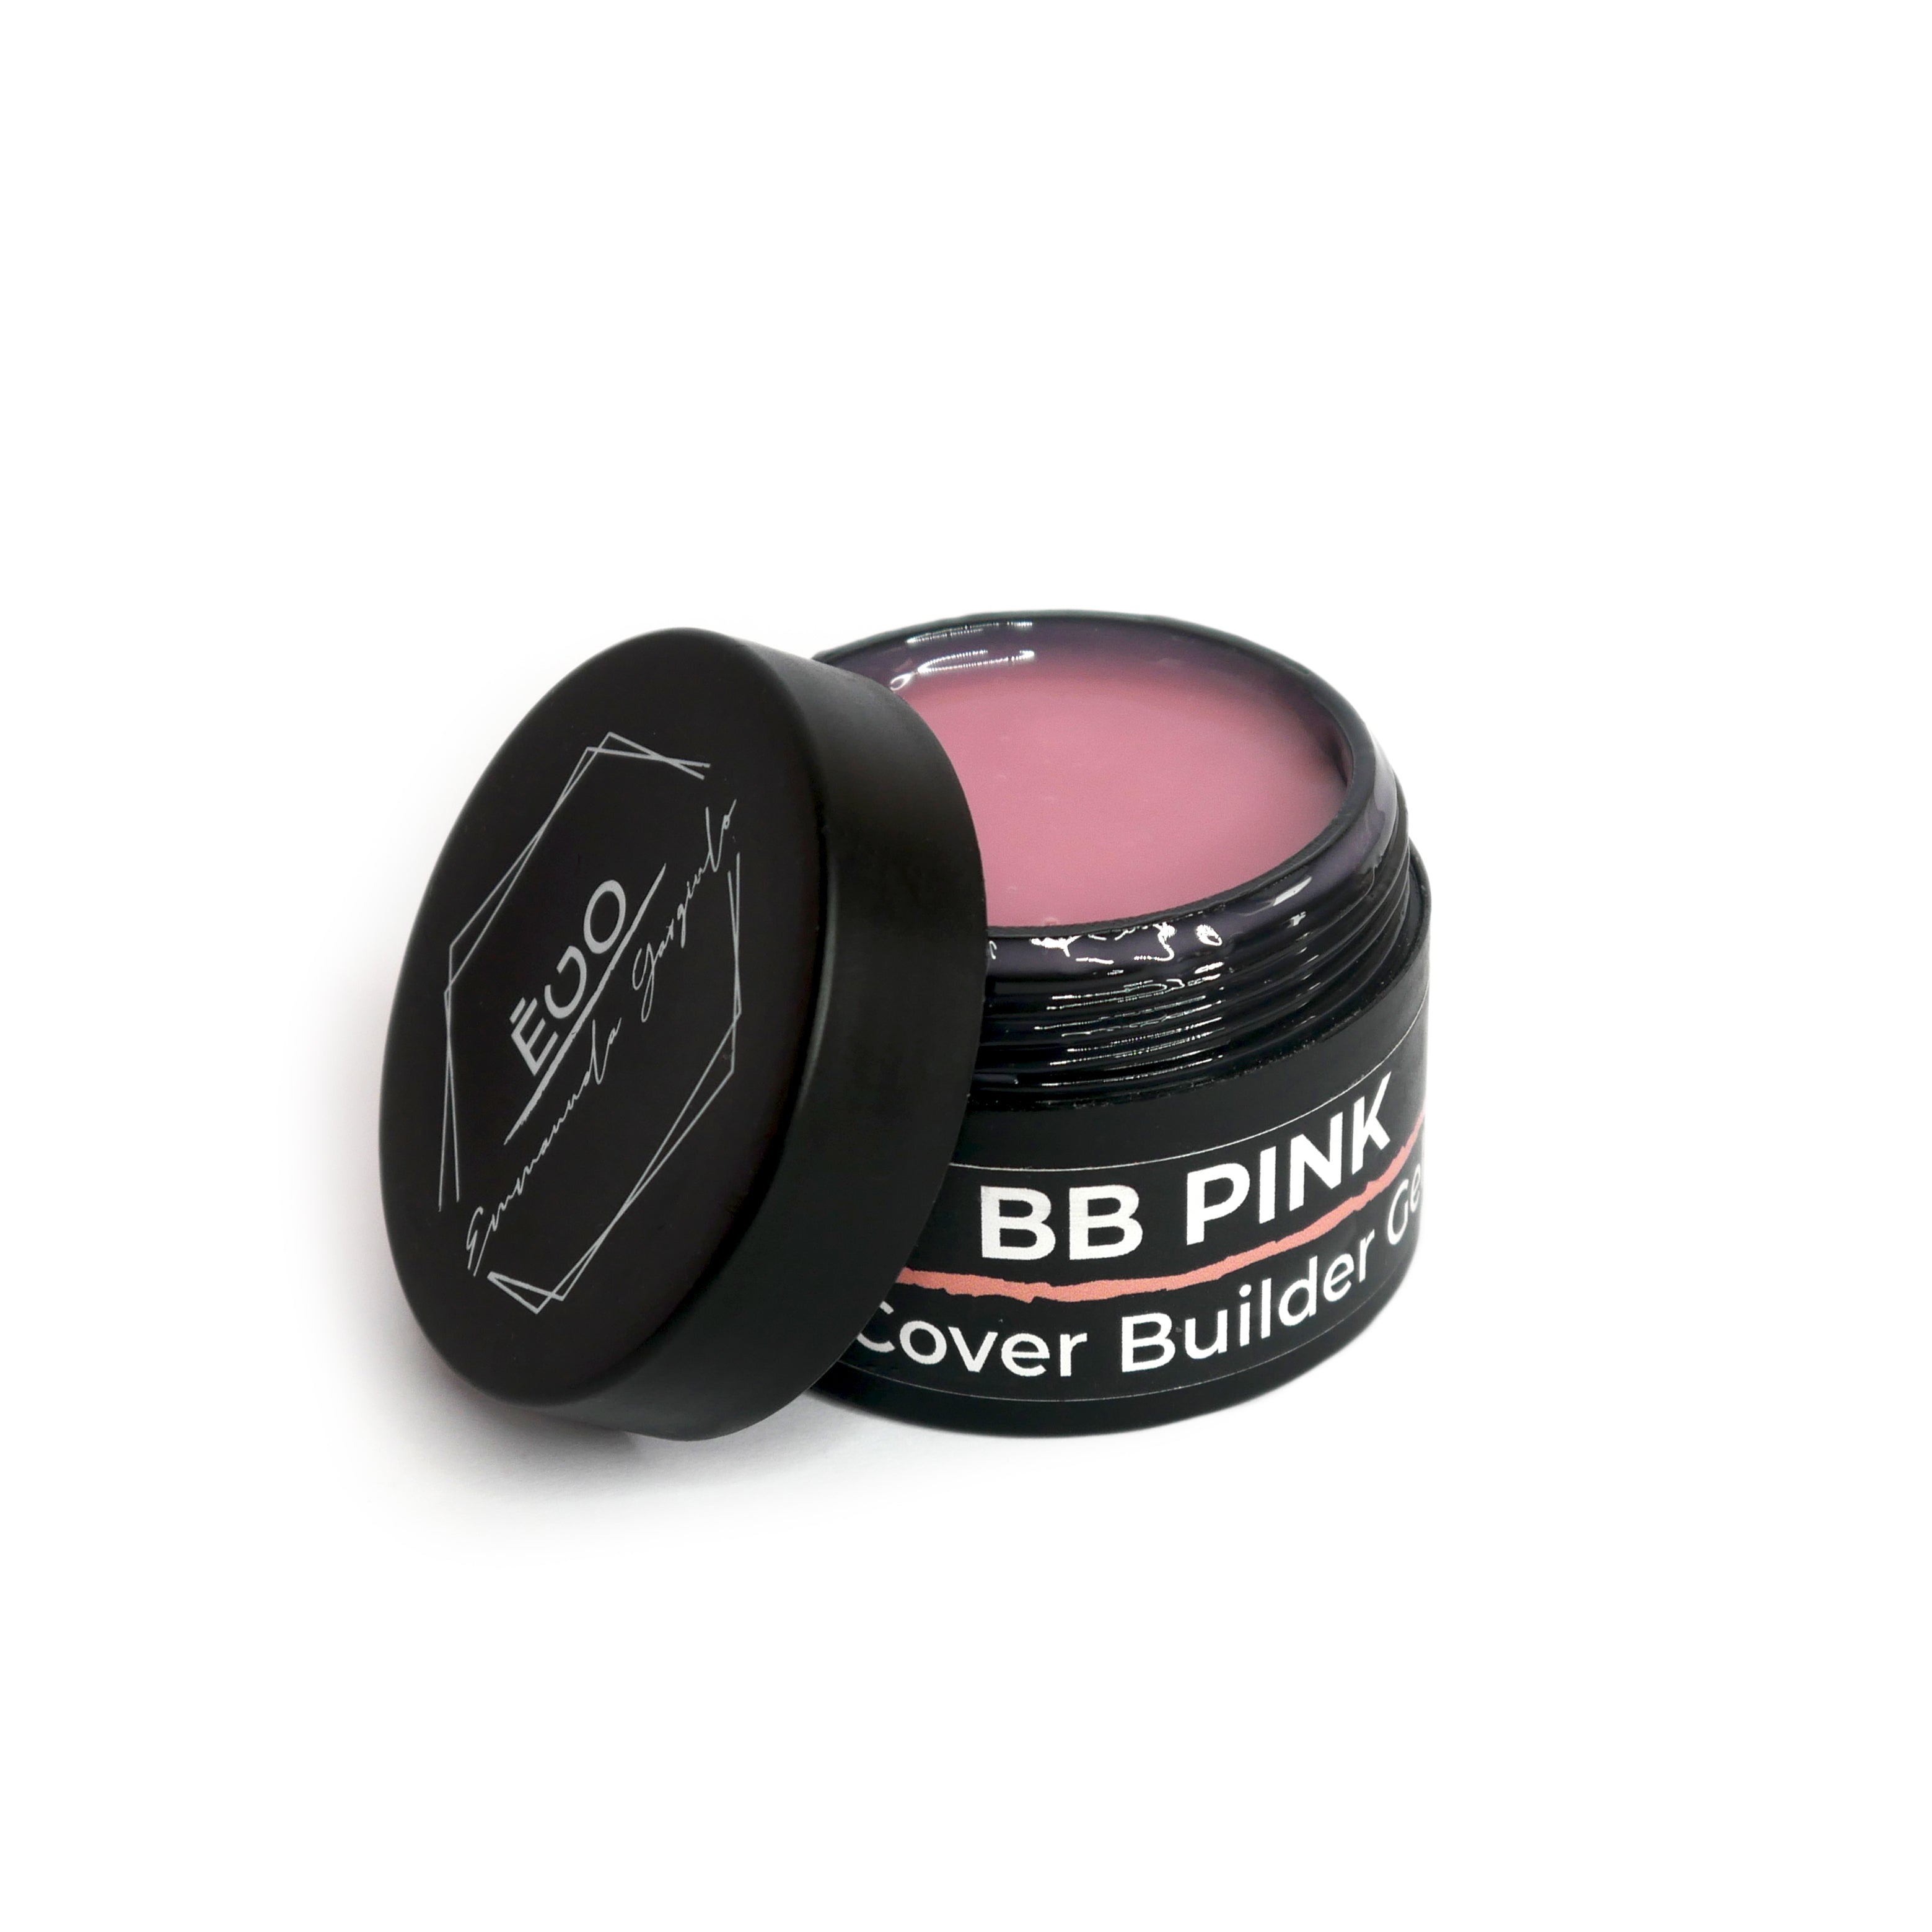 BB Pink